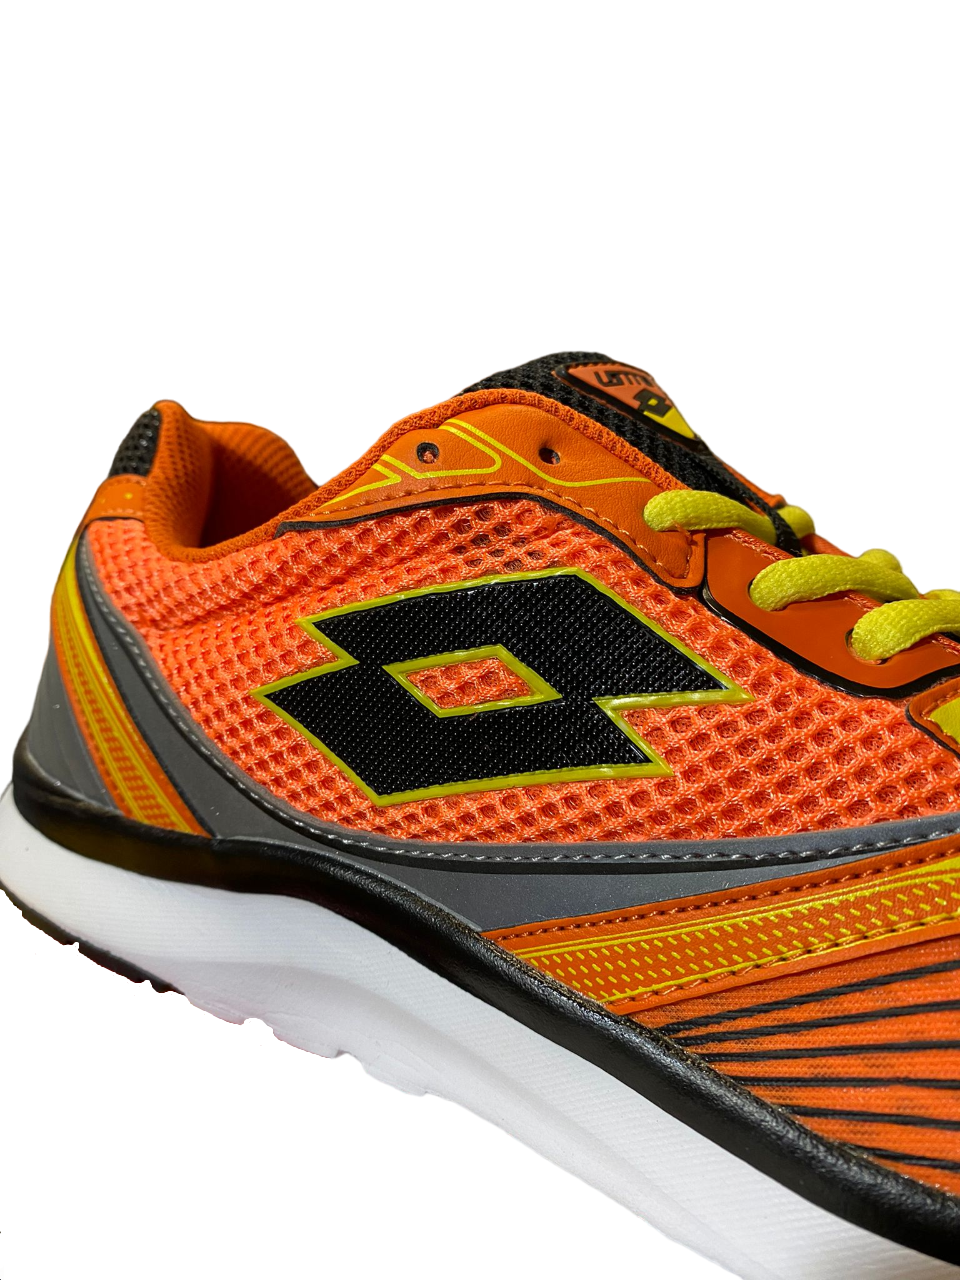 Lotto Speedride II R5917 orange running shoe